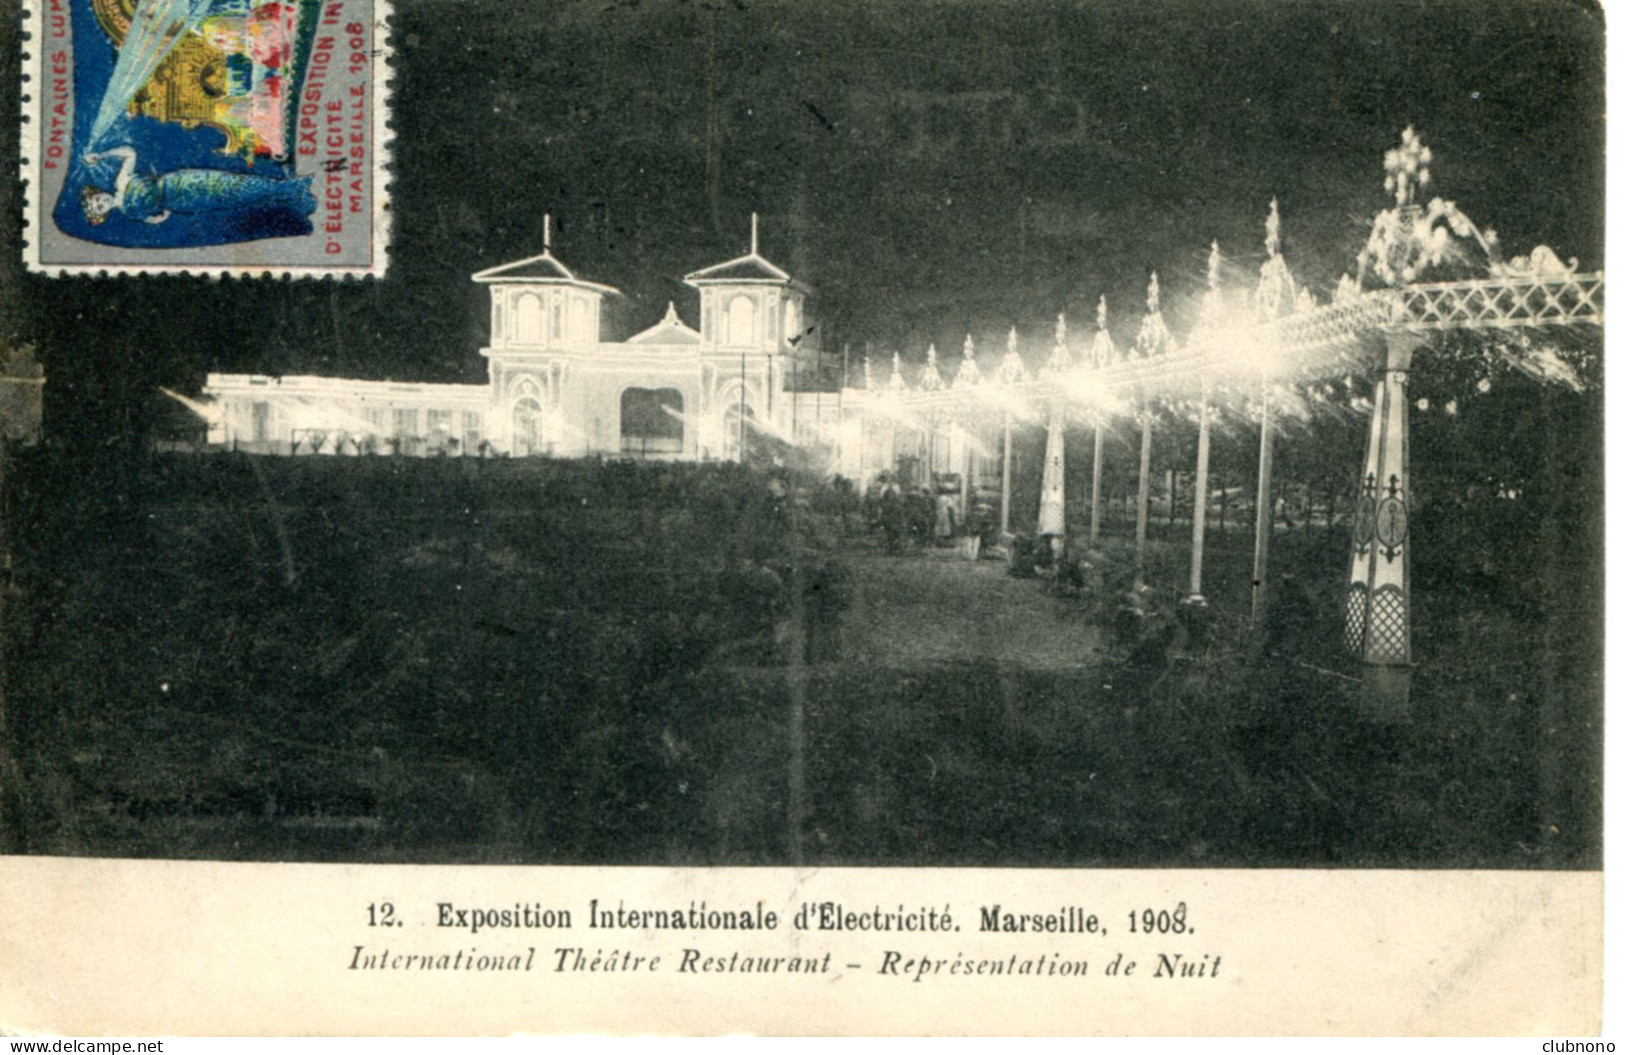 CPA - MARSEILLE - EXPO INT. D'ELECTRICITE 1908 - INTERNATIONAL THEATRE RESTAURANT DE NUIT - Mostra Elettricità E Altre